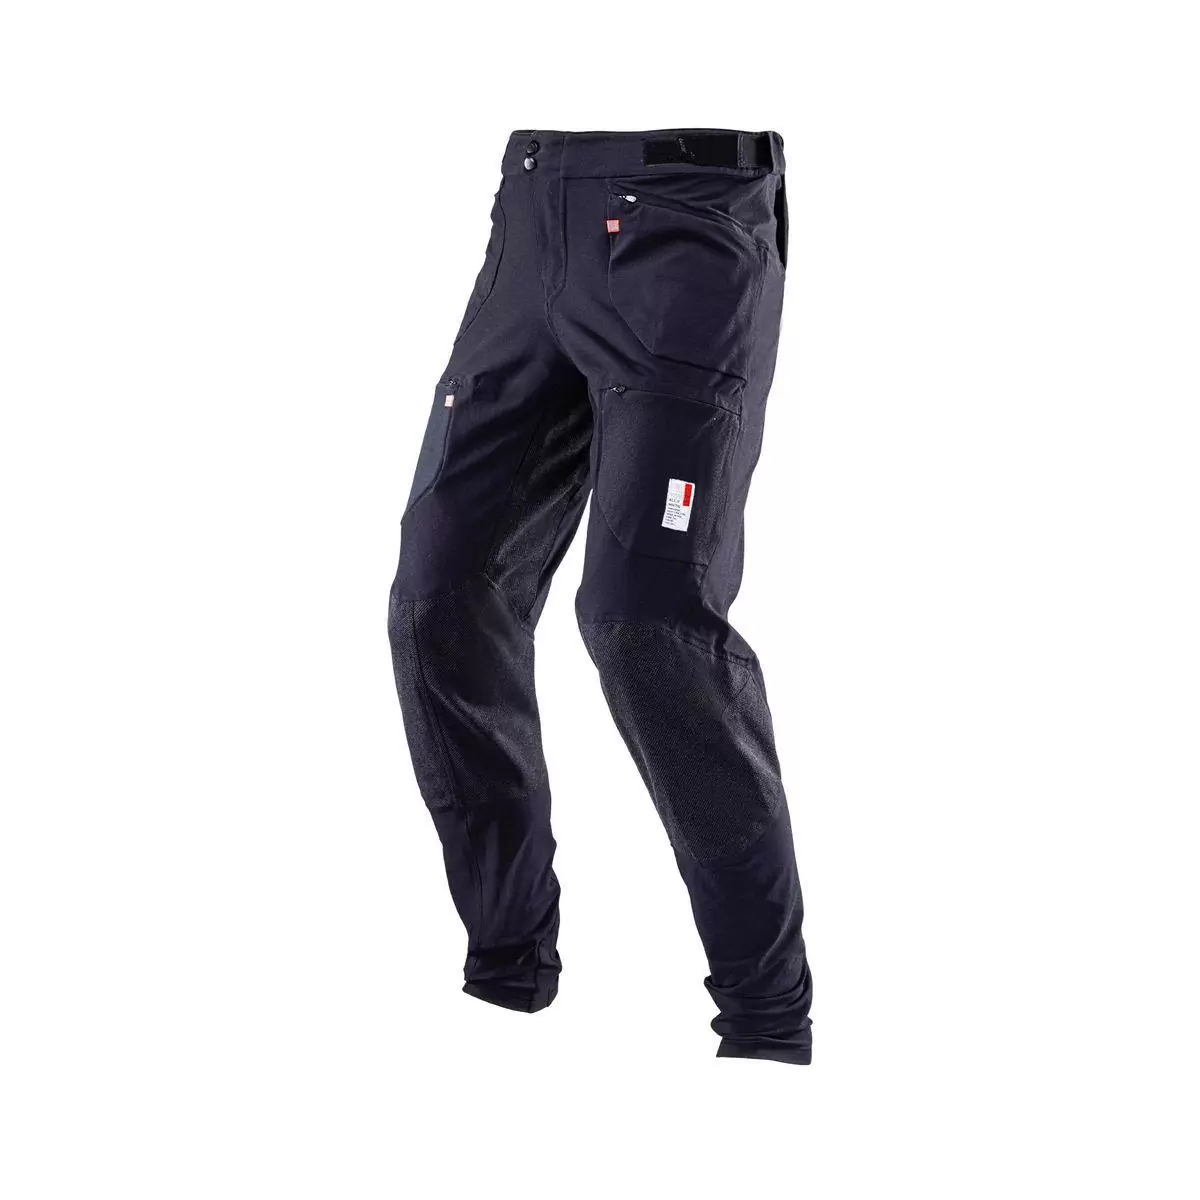 Pantalones MTB Allmtn 4.0 Largos Negro Talla M - image